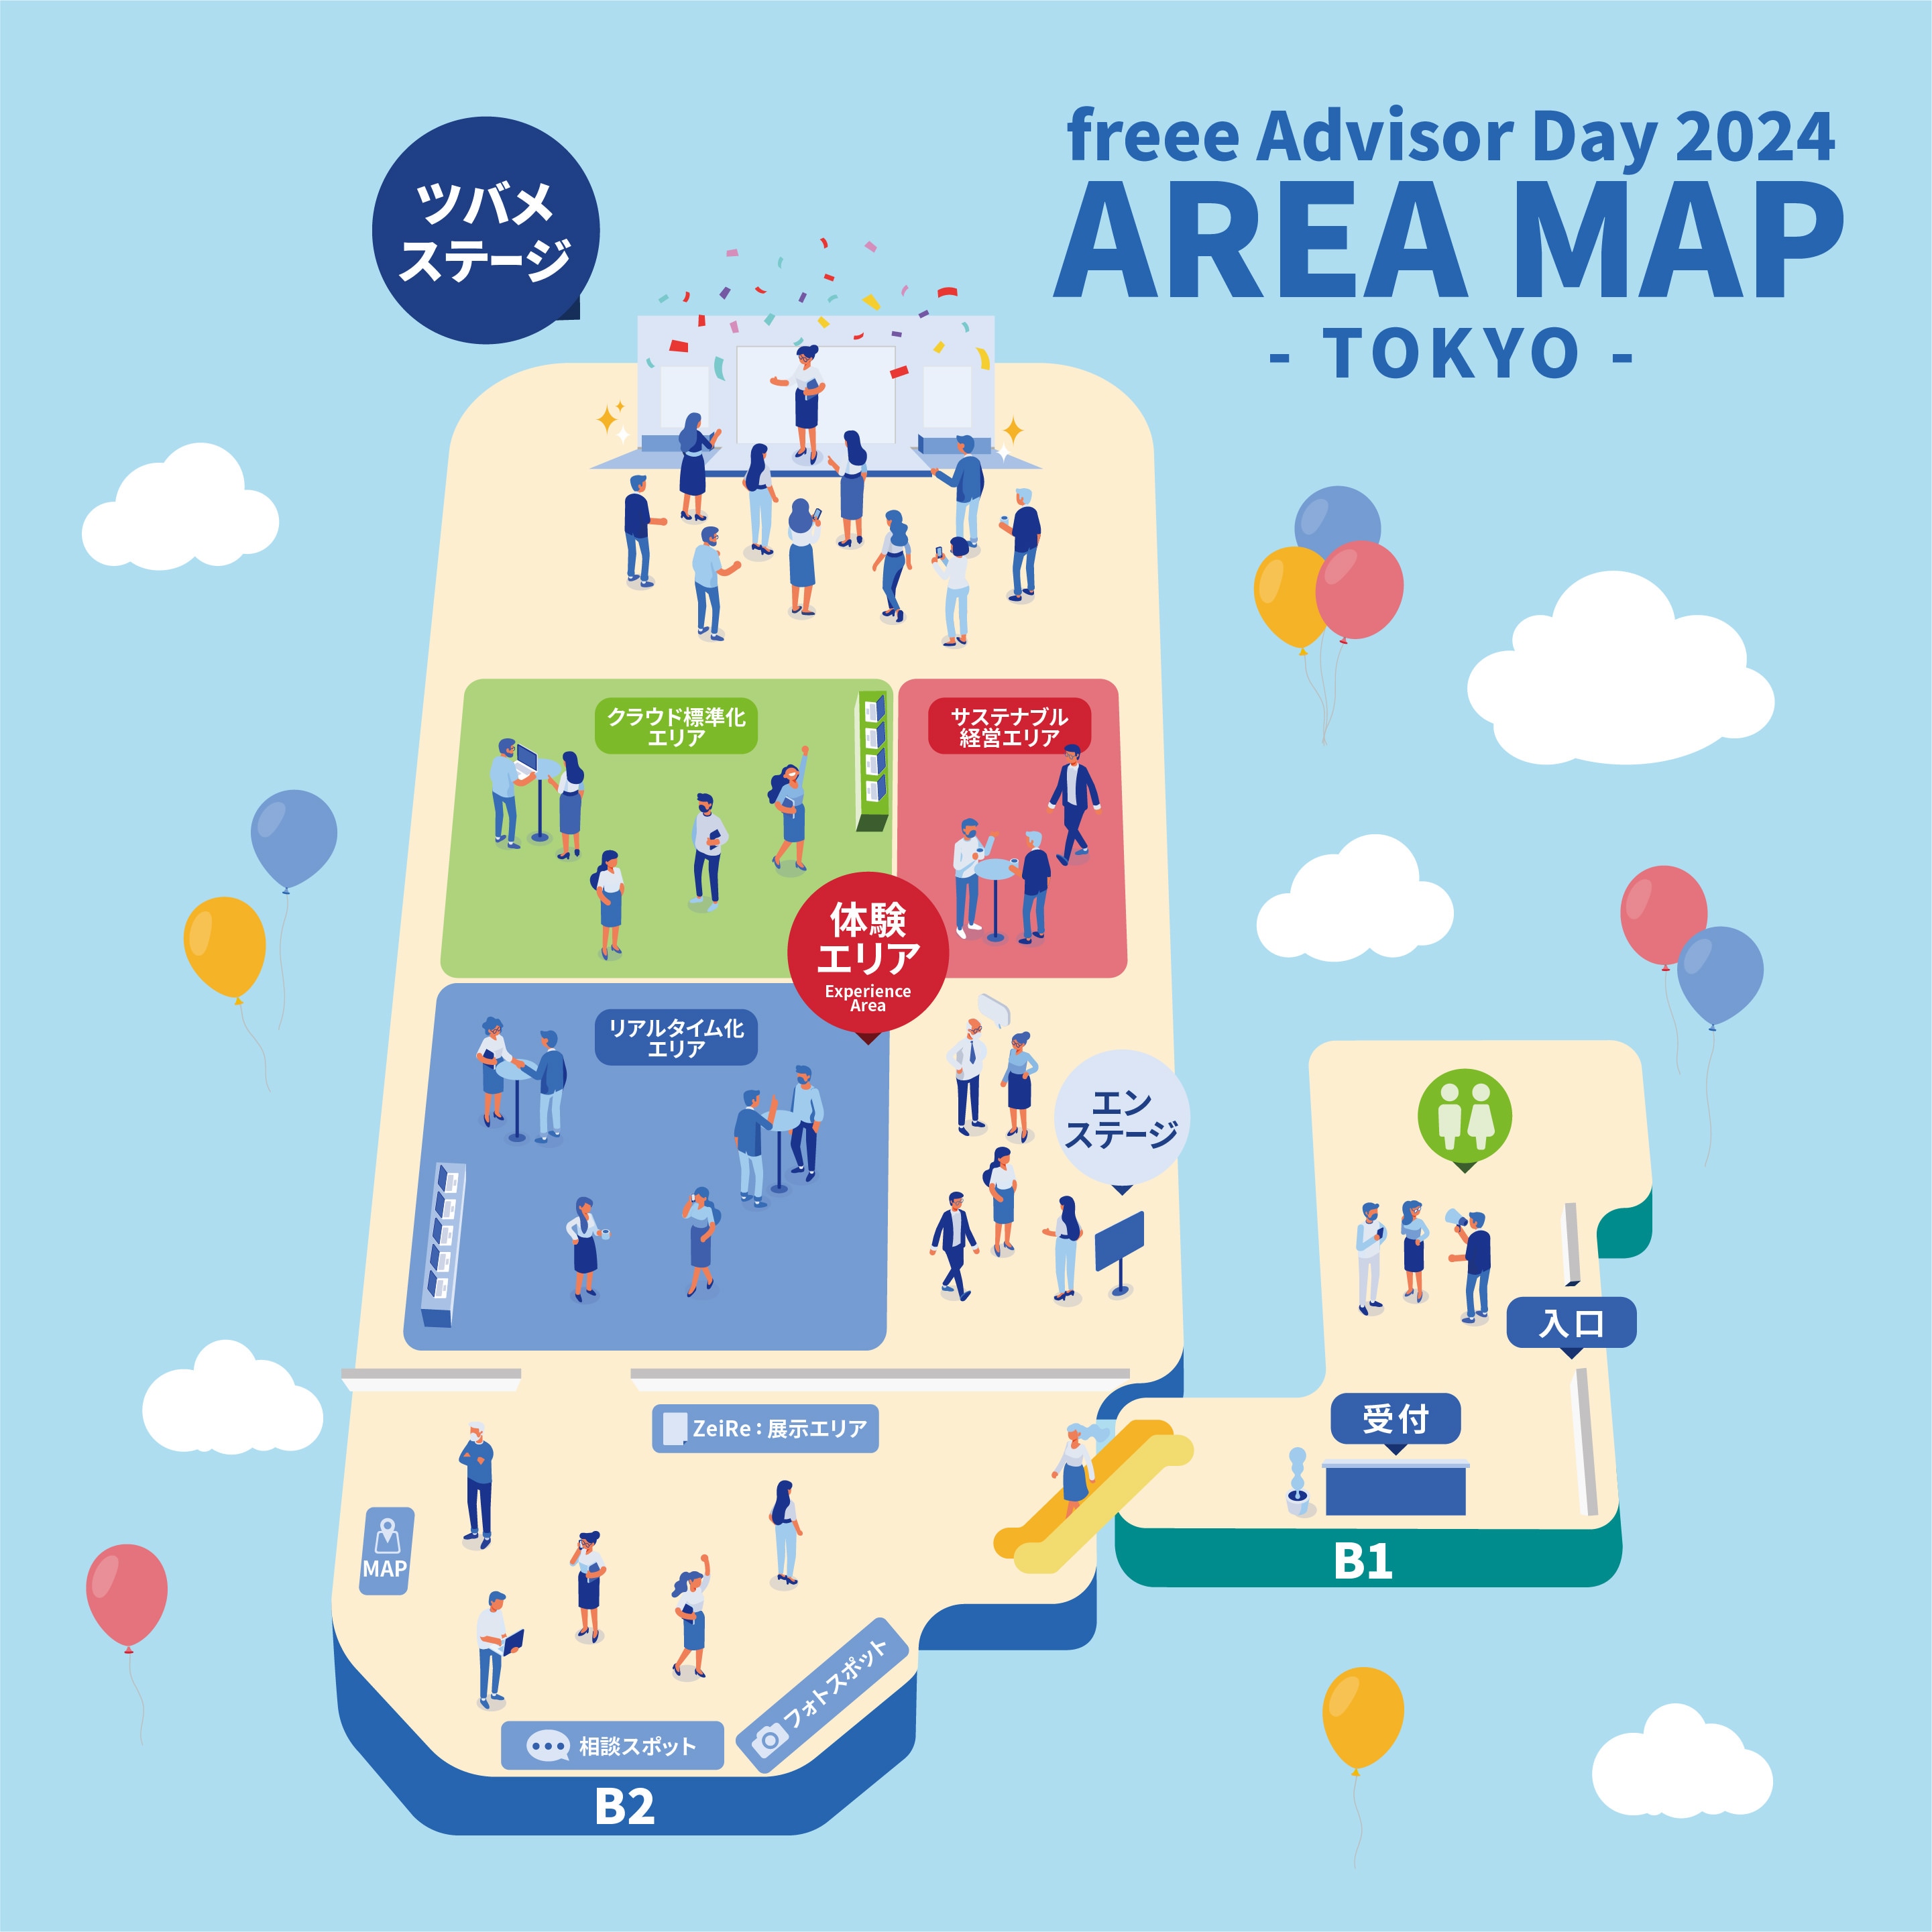 freee Advisor Day 2024 Area Map Tokyo